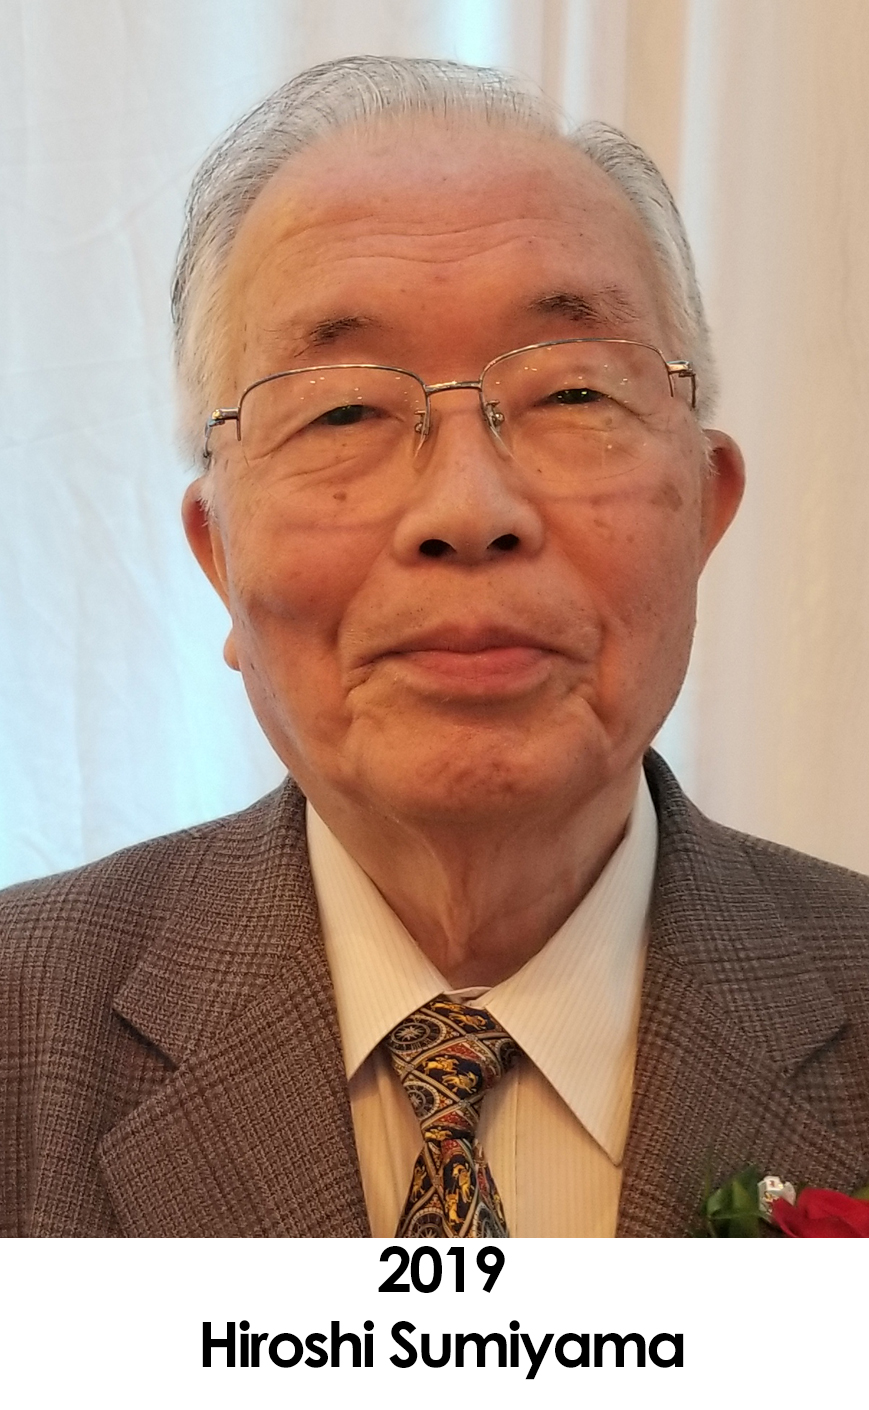 Hiroshi Sumiyama